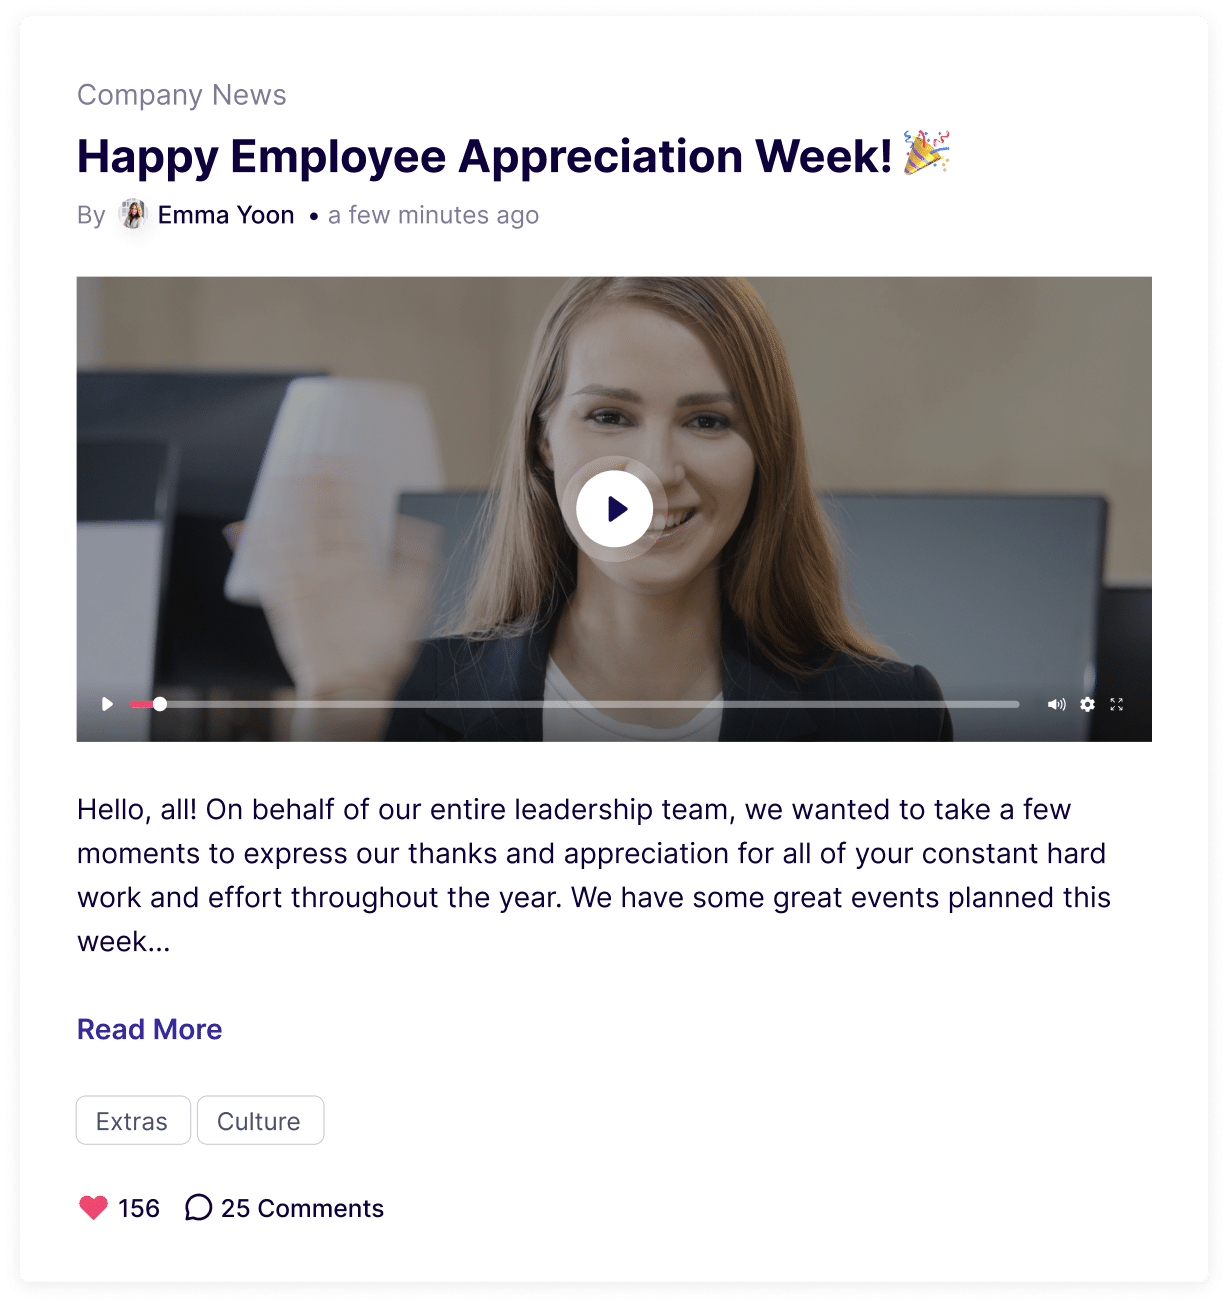 Employee Appreciation CEO video in newsfeed